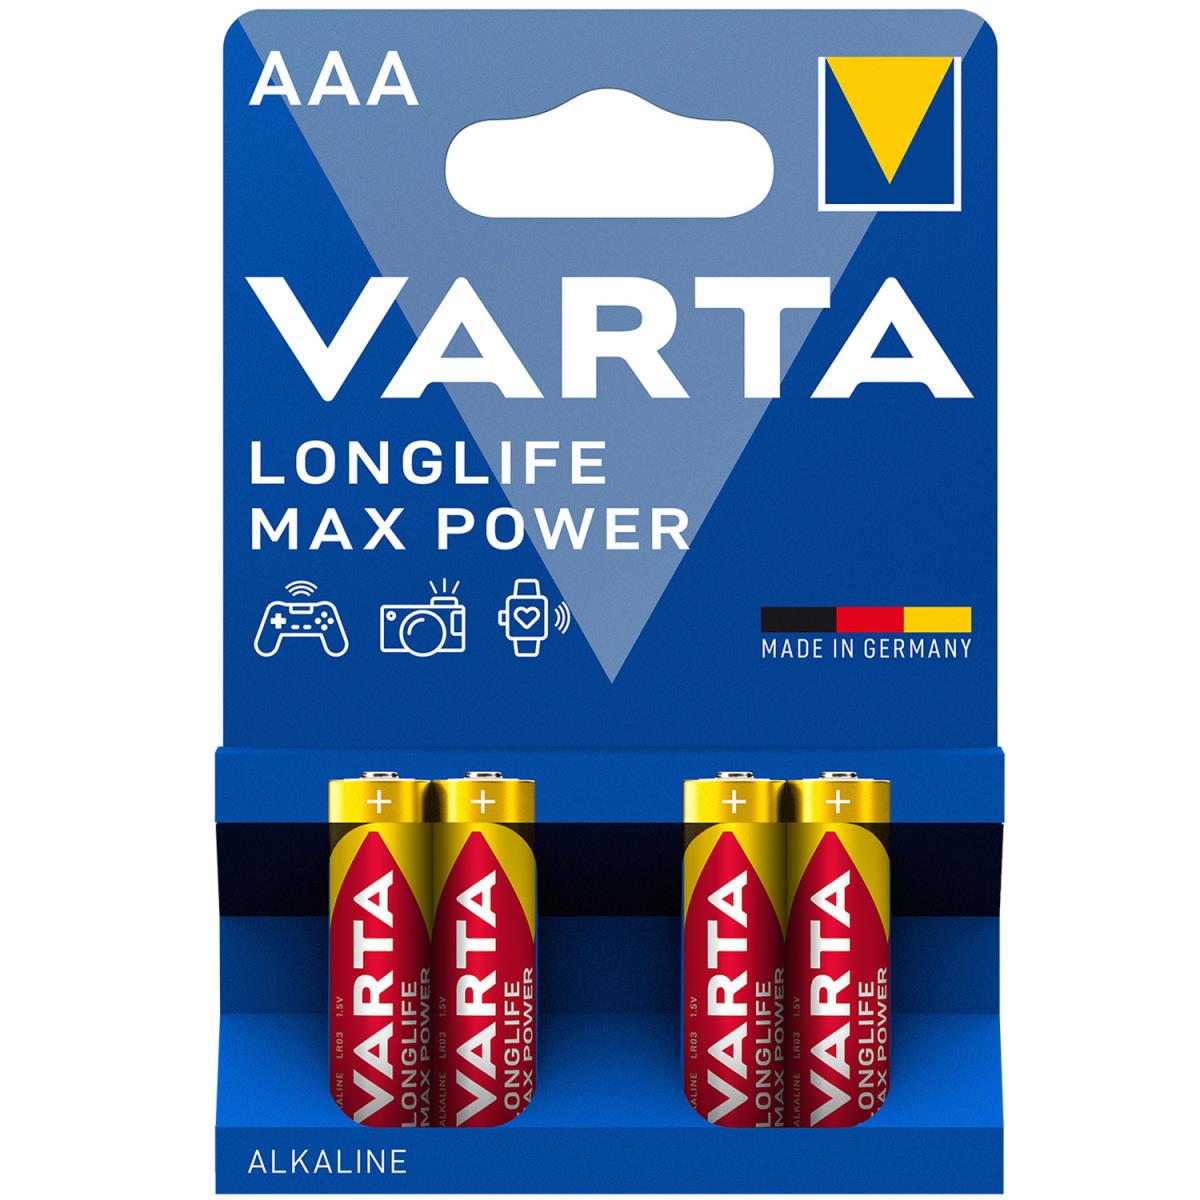 Varta: Longlife Max Power AAA / LR03 Batteri 4-pack